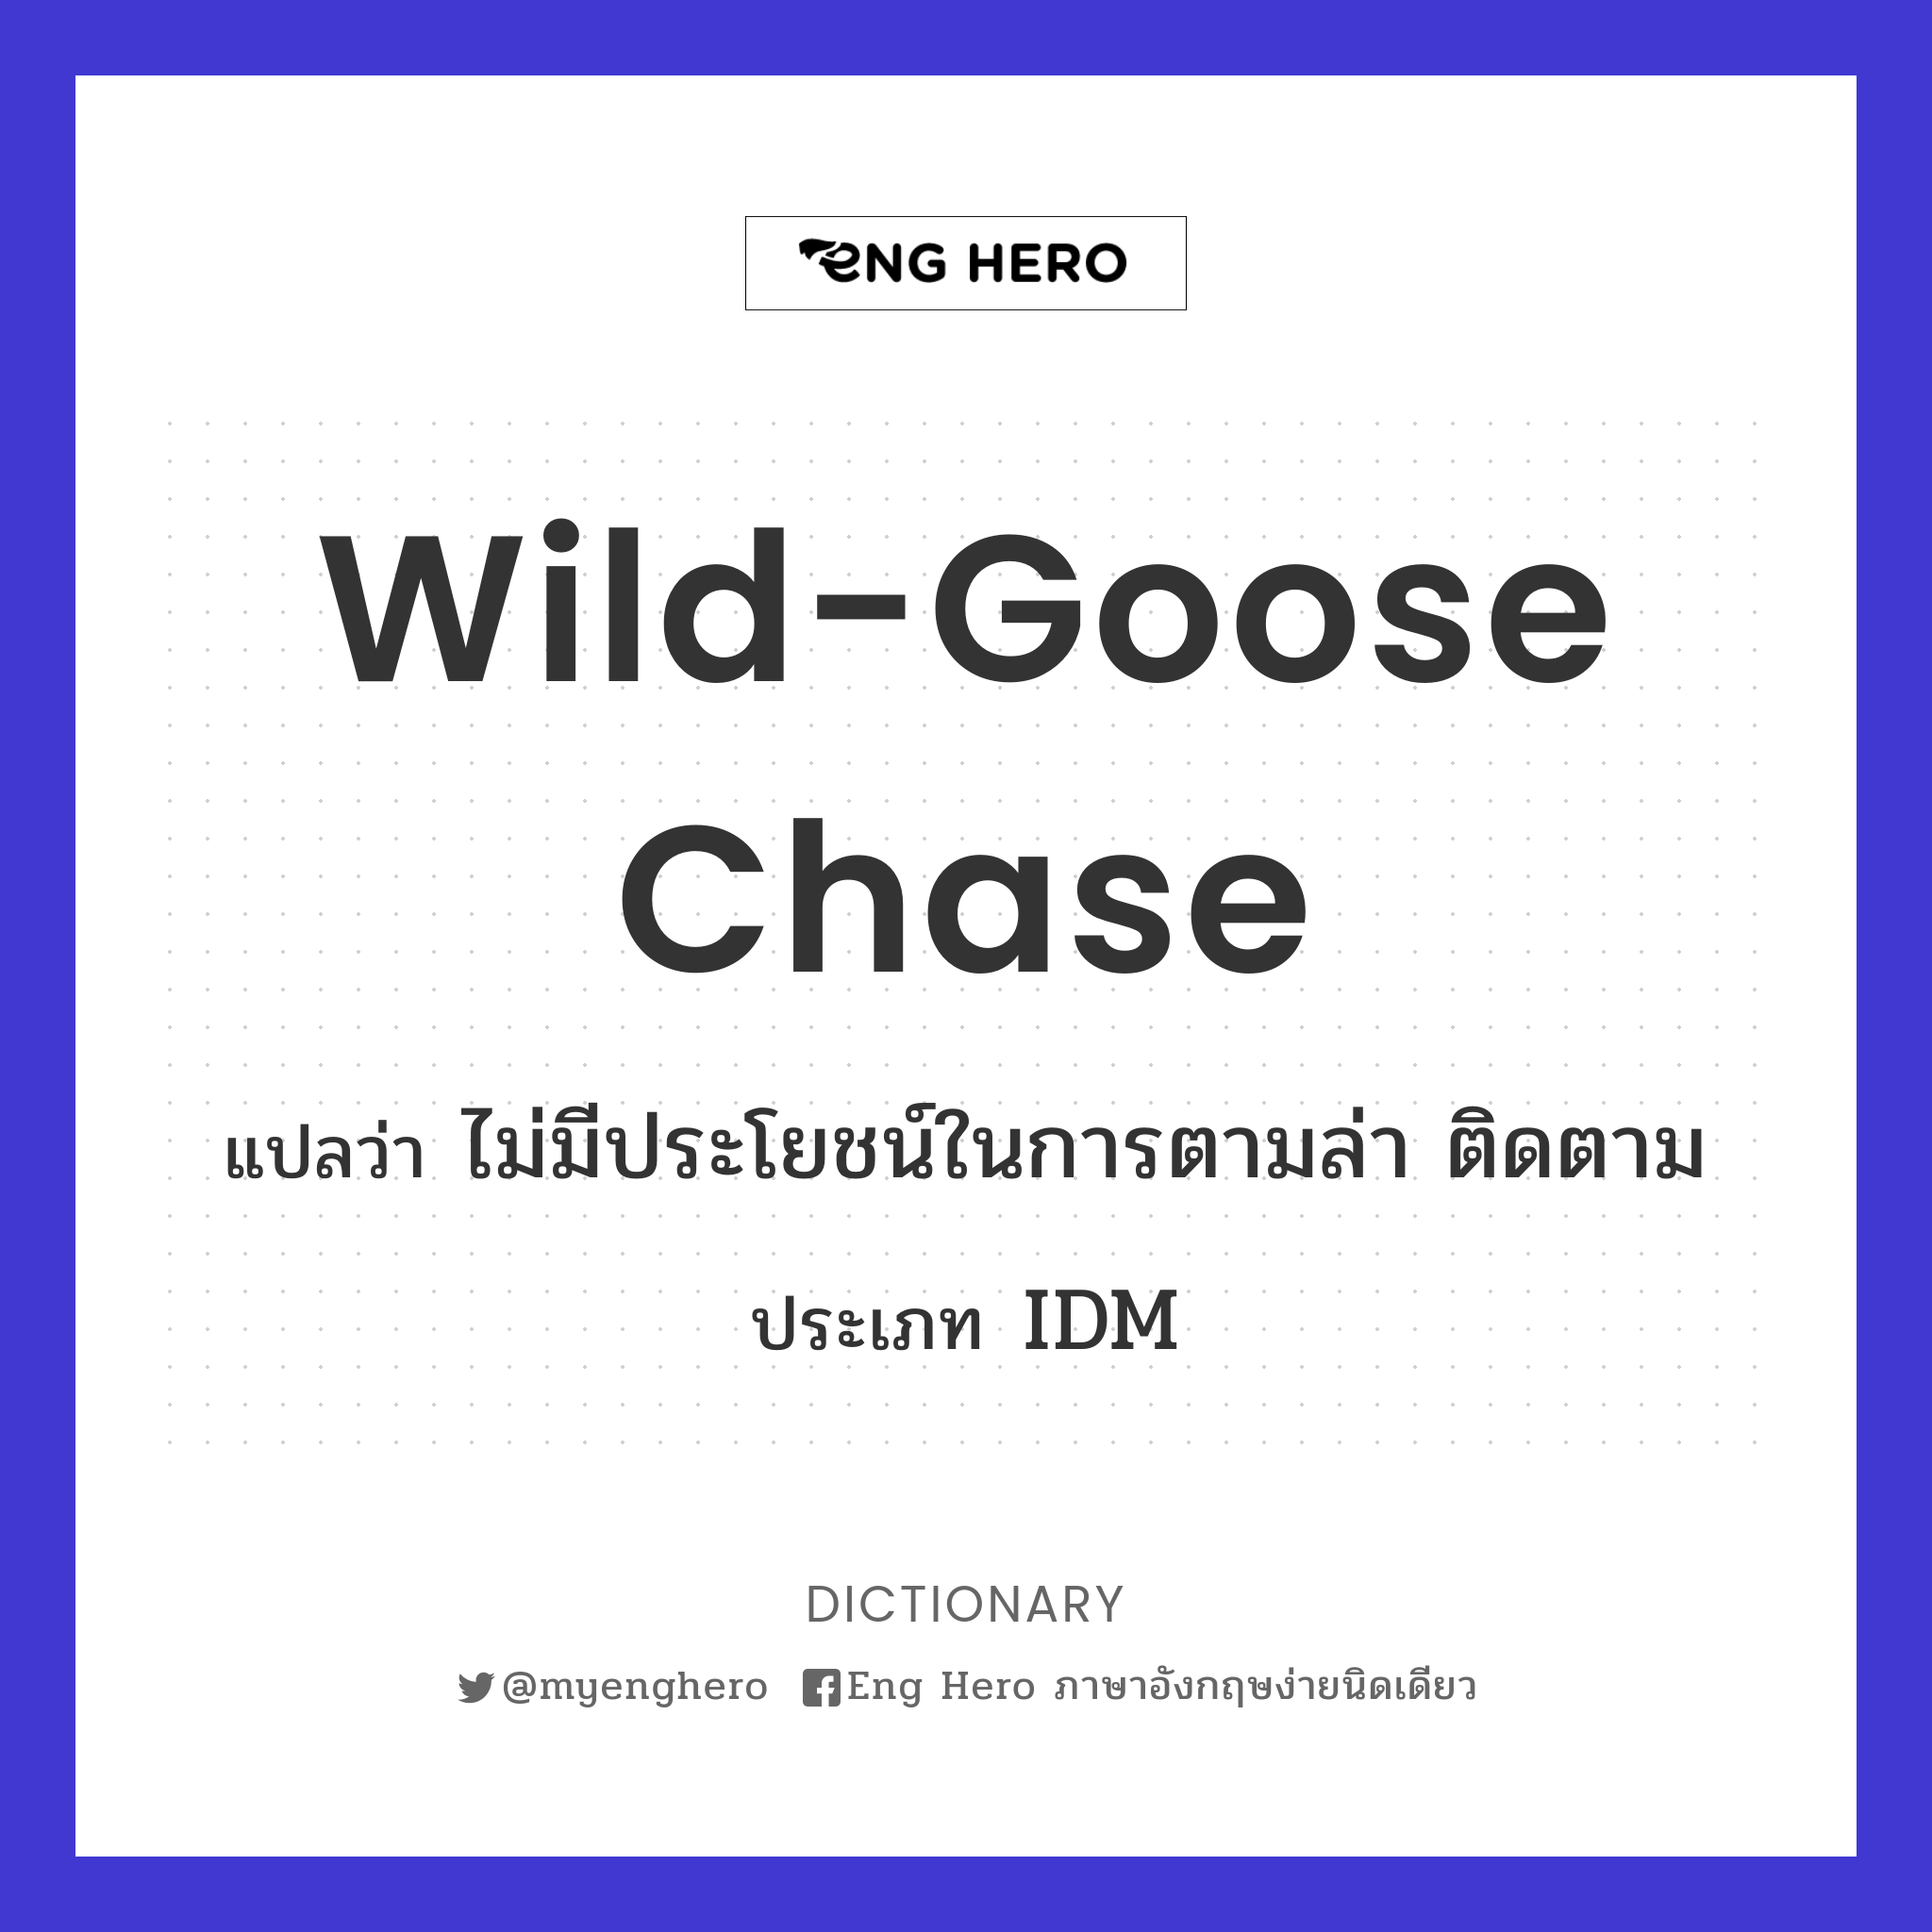 wild-goose chase